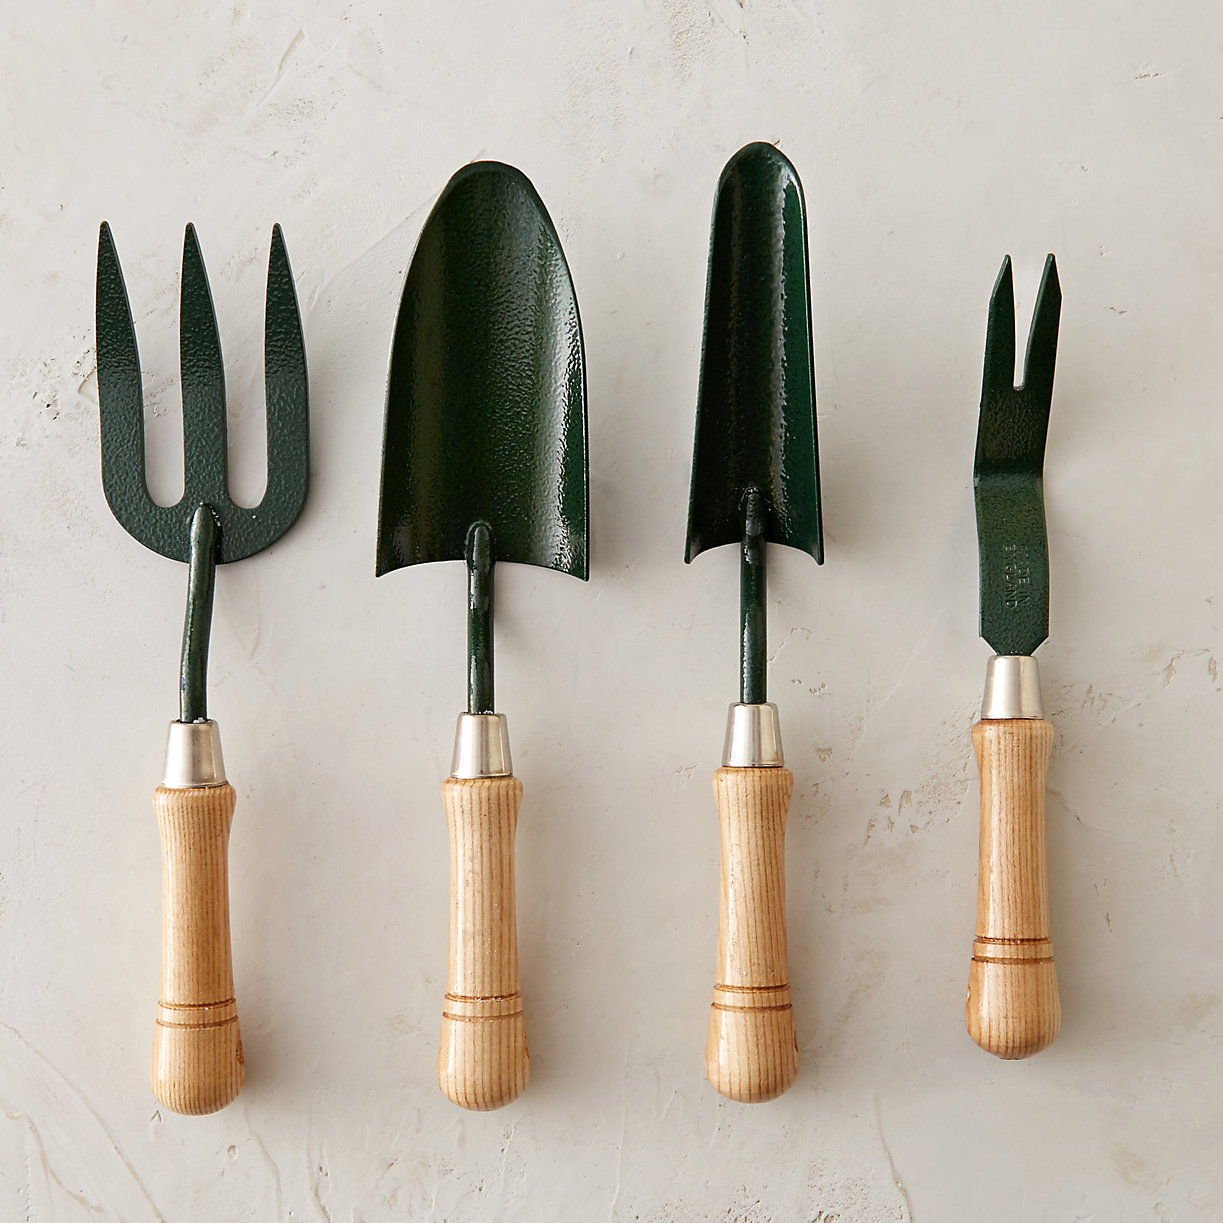 Gardener tool set